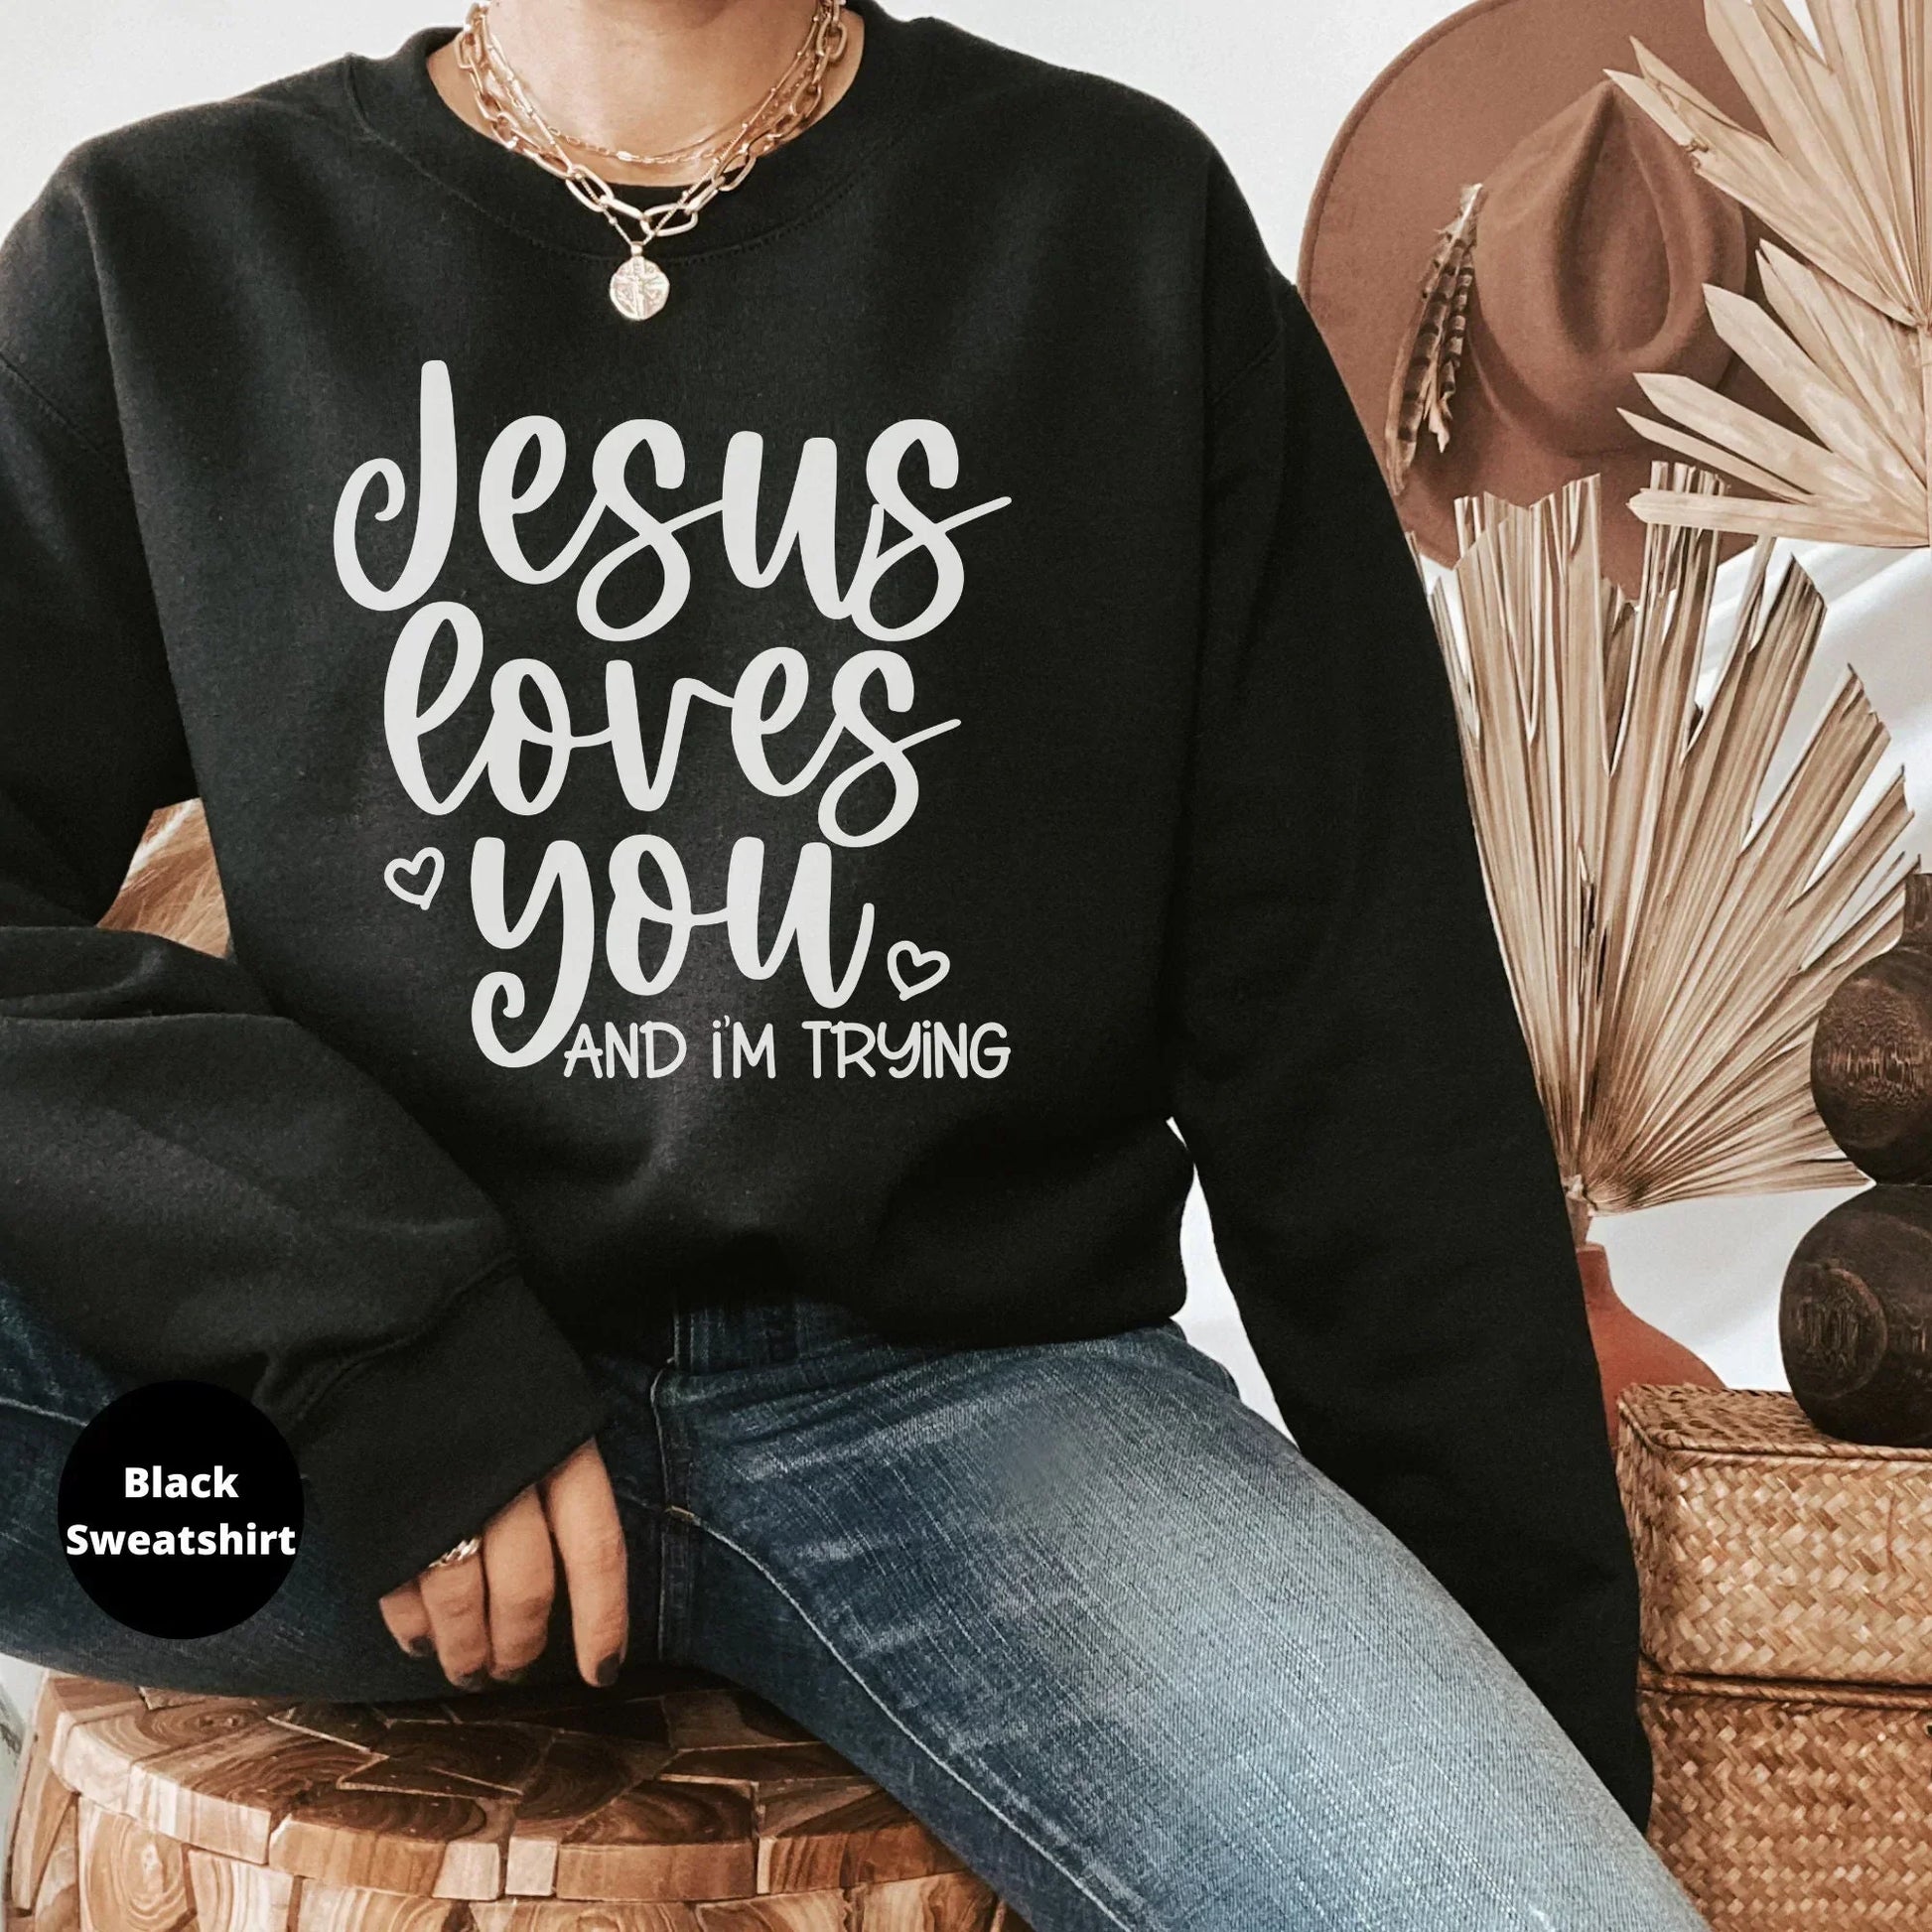 Jesus Loves You, I'm Trying. Funny Christian Shirt HMDesignStudioUS